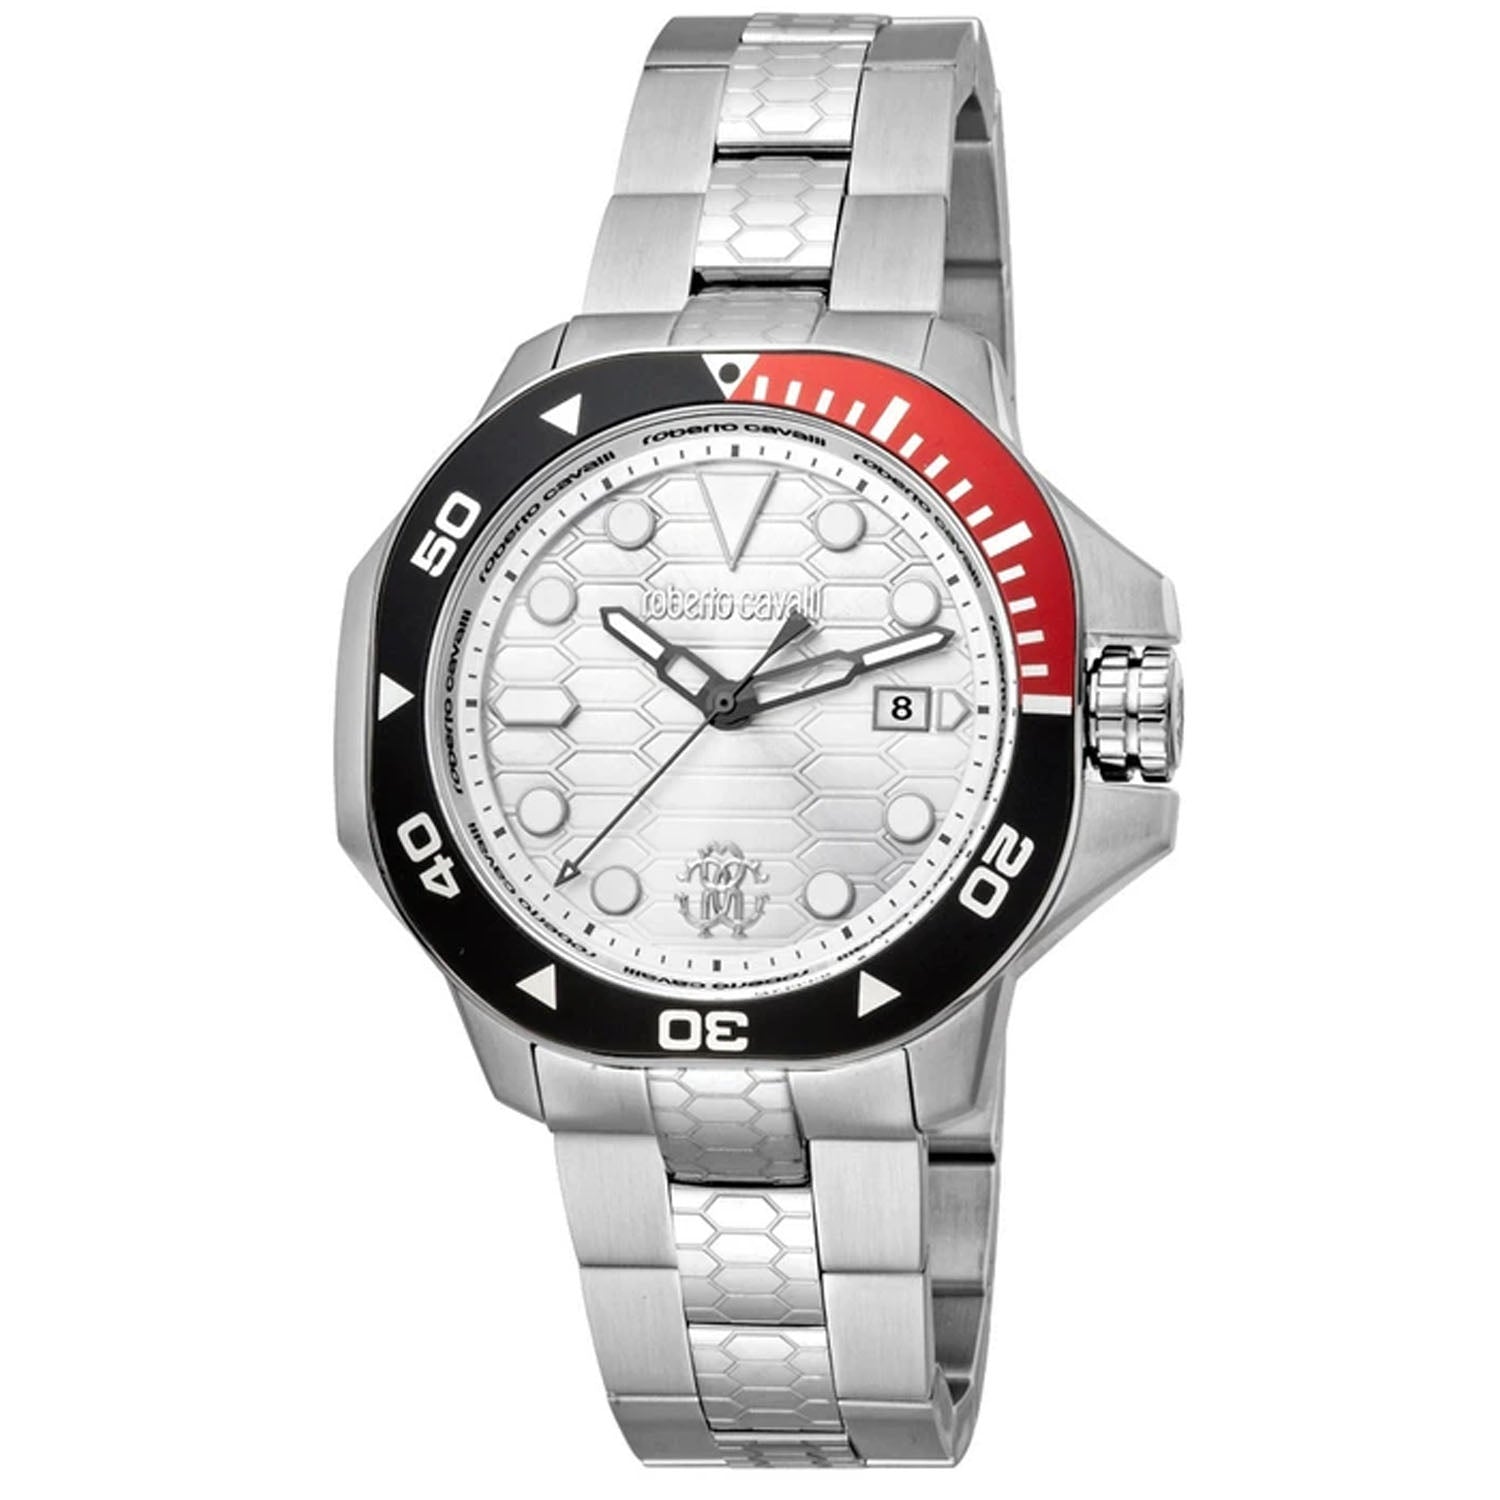 Roberto Cavalli Men's Classic Silver Dial Watch | Shop Premium Outlets